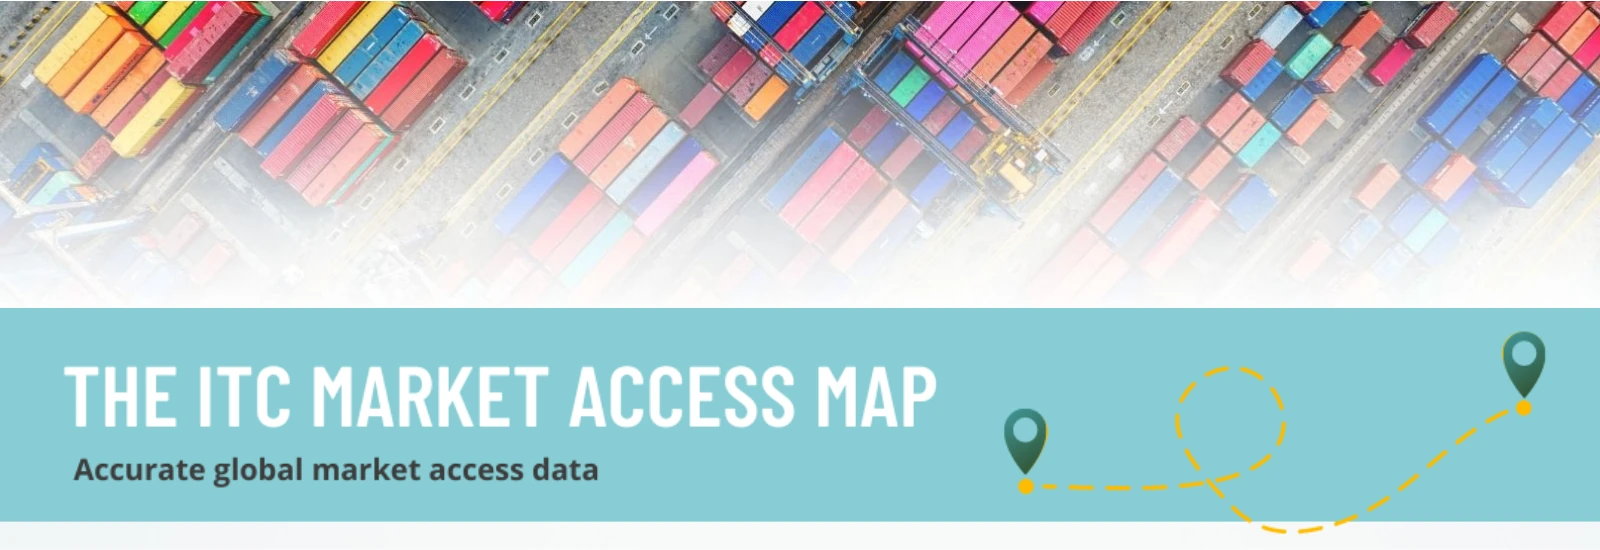 ITC Market Access Map